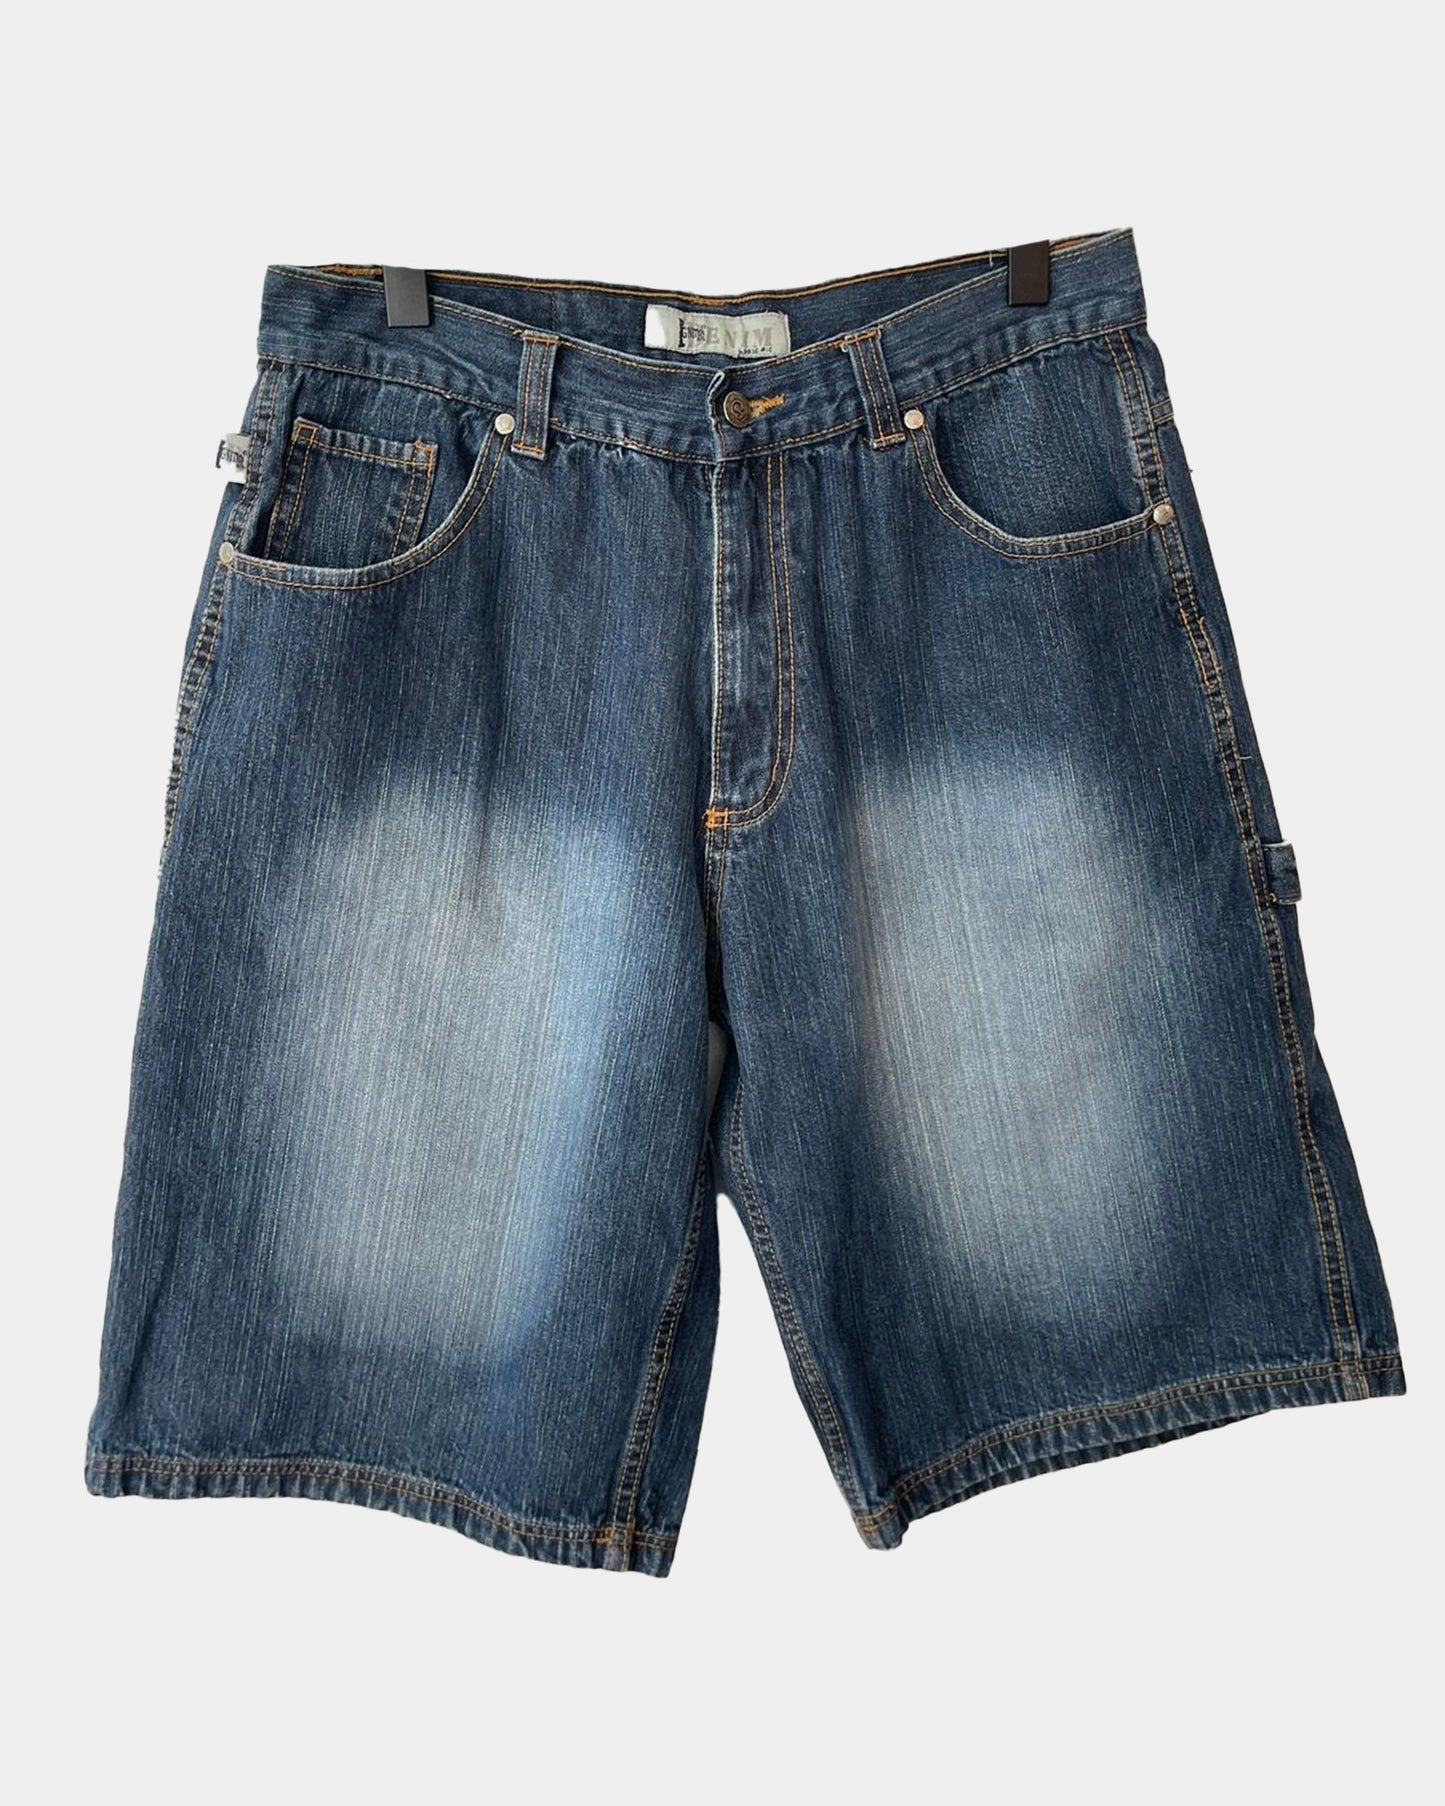 Vintage 90s 2000s Jean Denim Faded Shorts Jorts 32 34 36